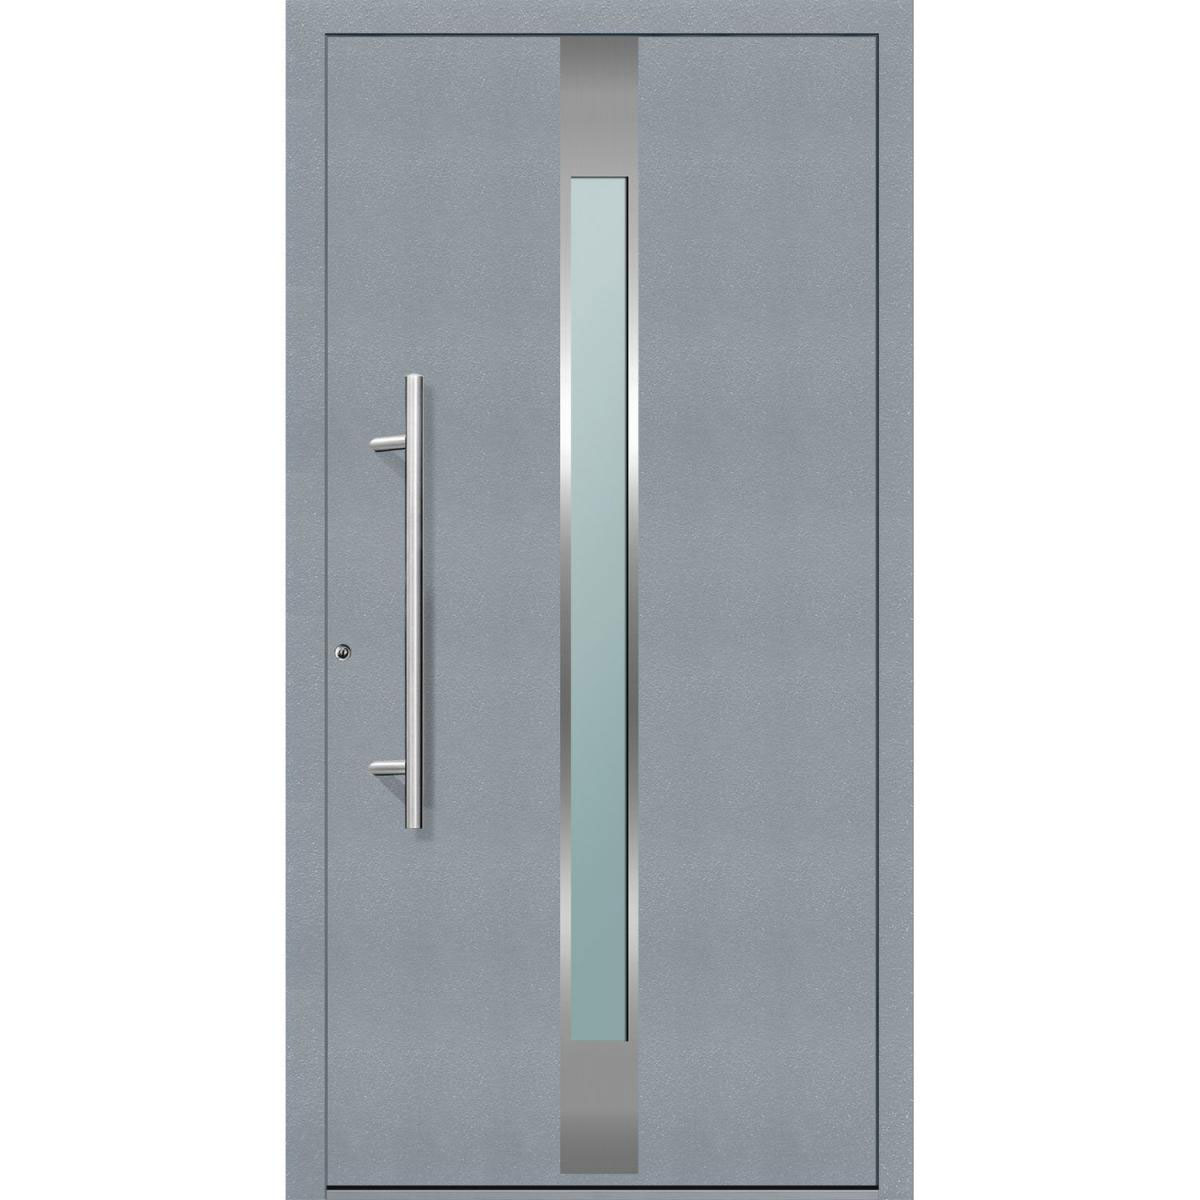 Aluminium Sicherheits-Haustür „Rimini Exklusiv“, 75mm, grau, 100x210 cm, Anschlag links, inkl. Griffset